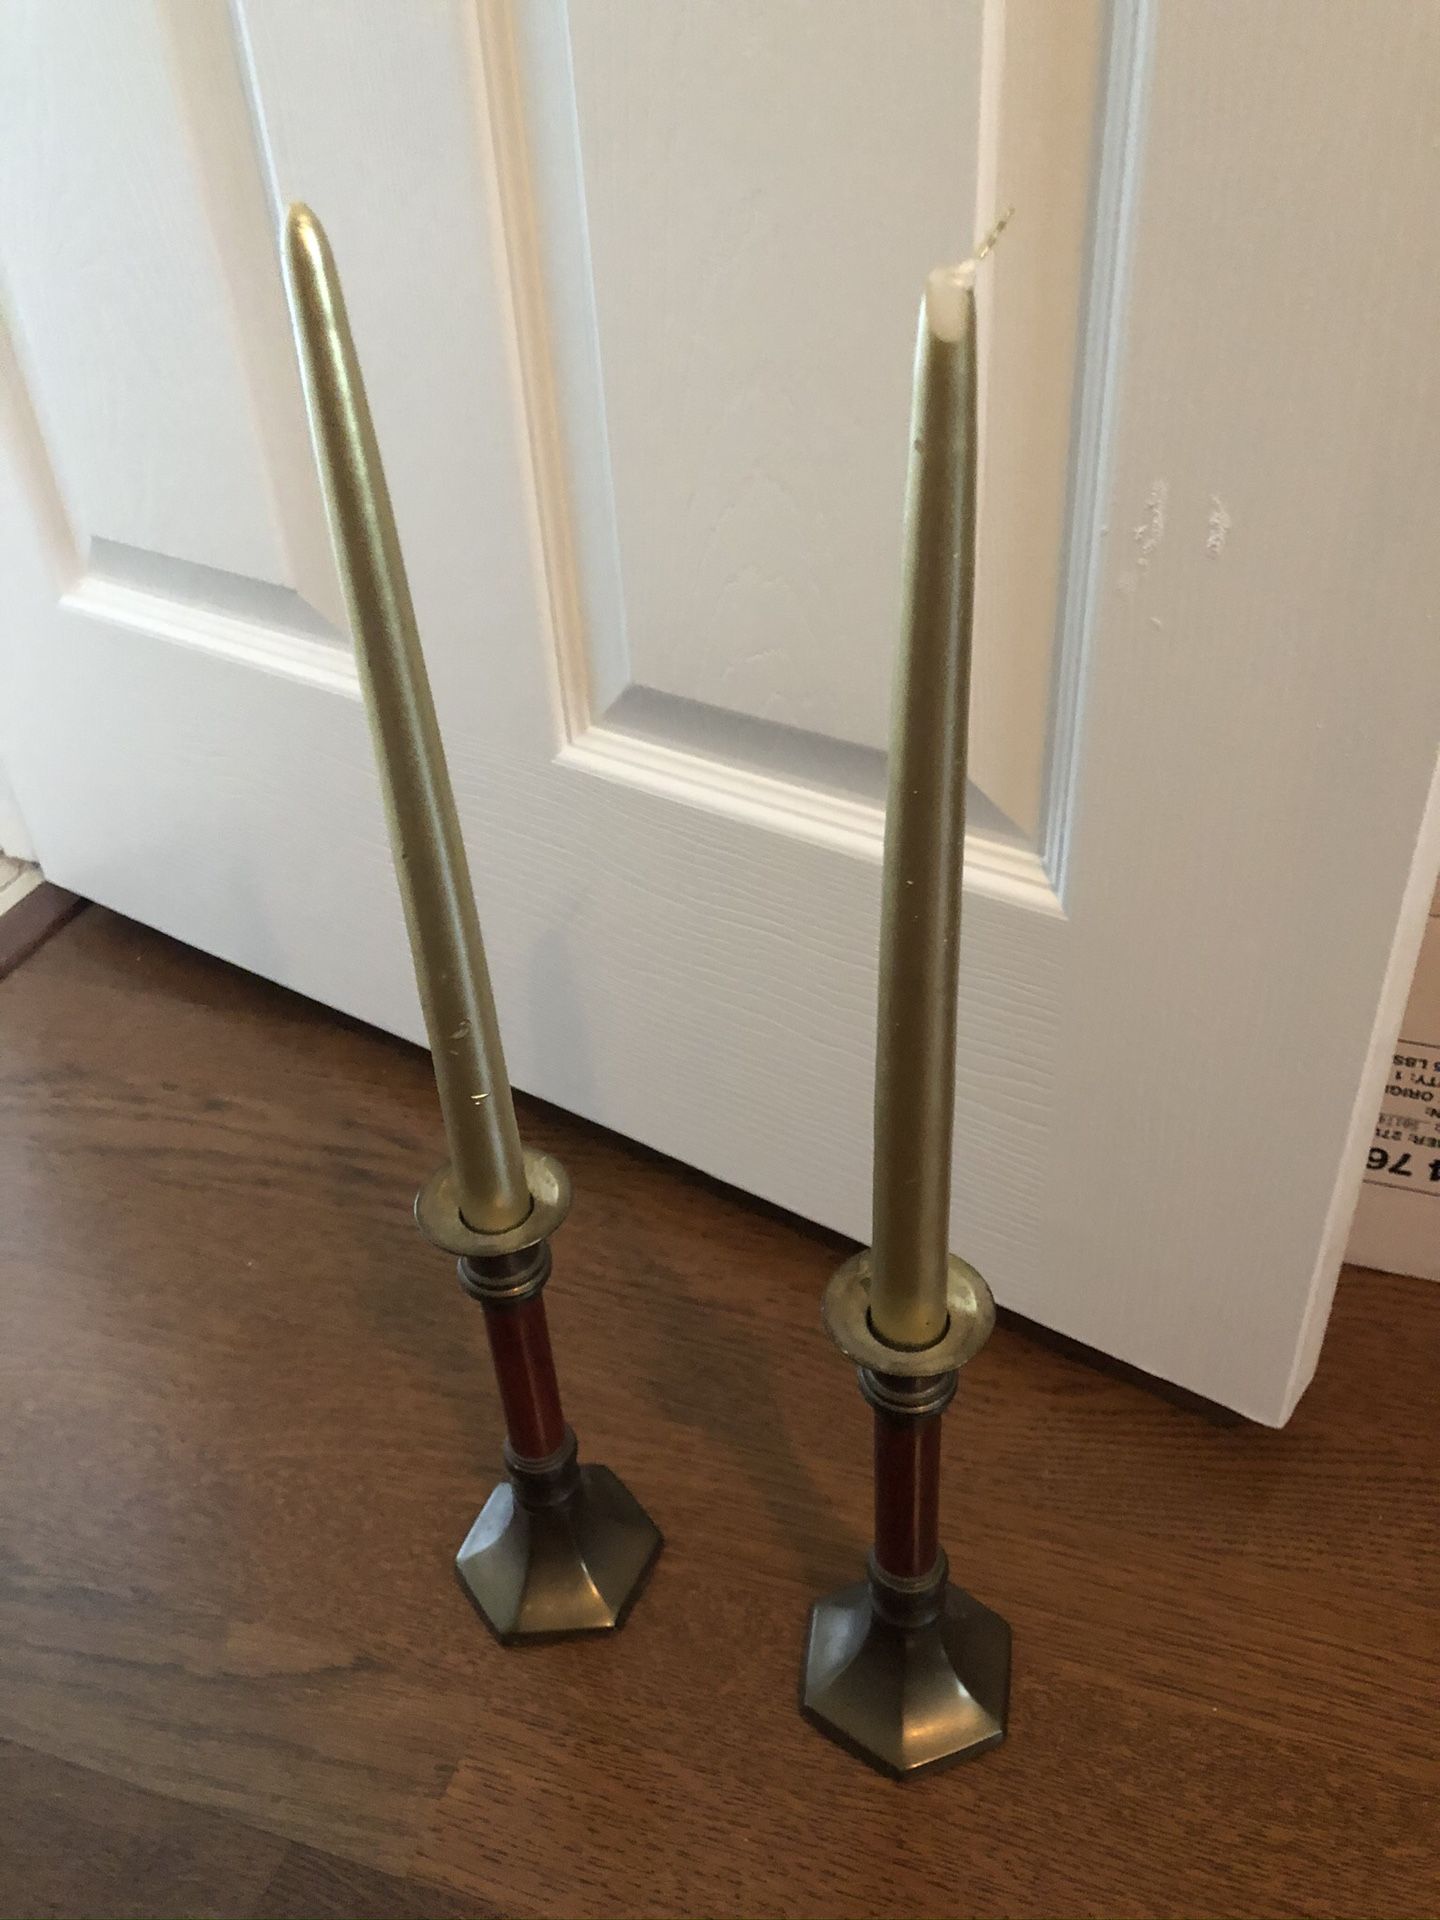 Set of gold/ maroon / olive candlesticks